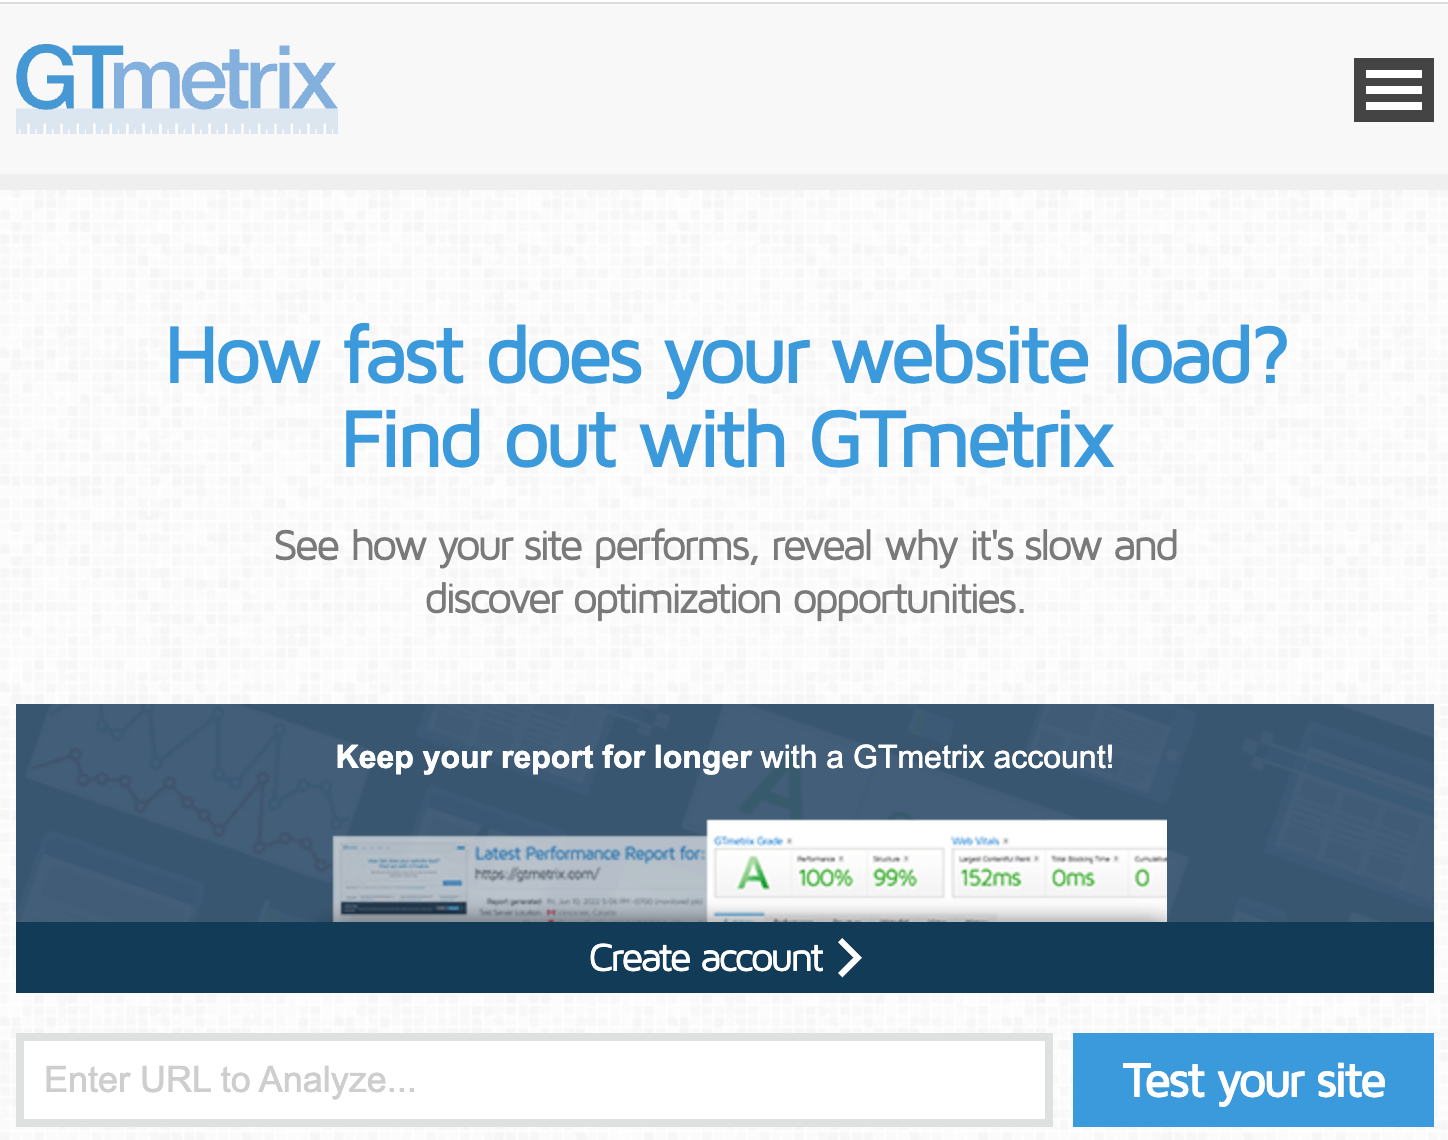 Interfaz de la página de inicio de GTmetrix